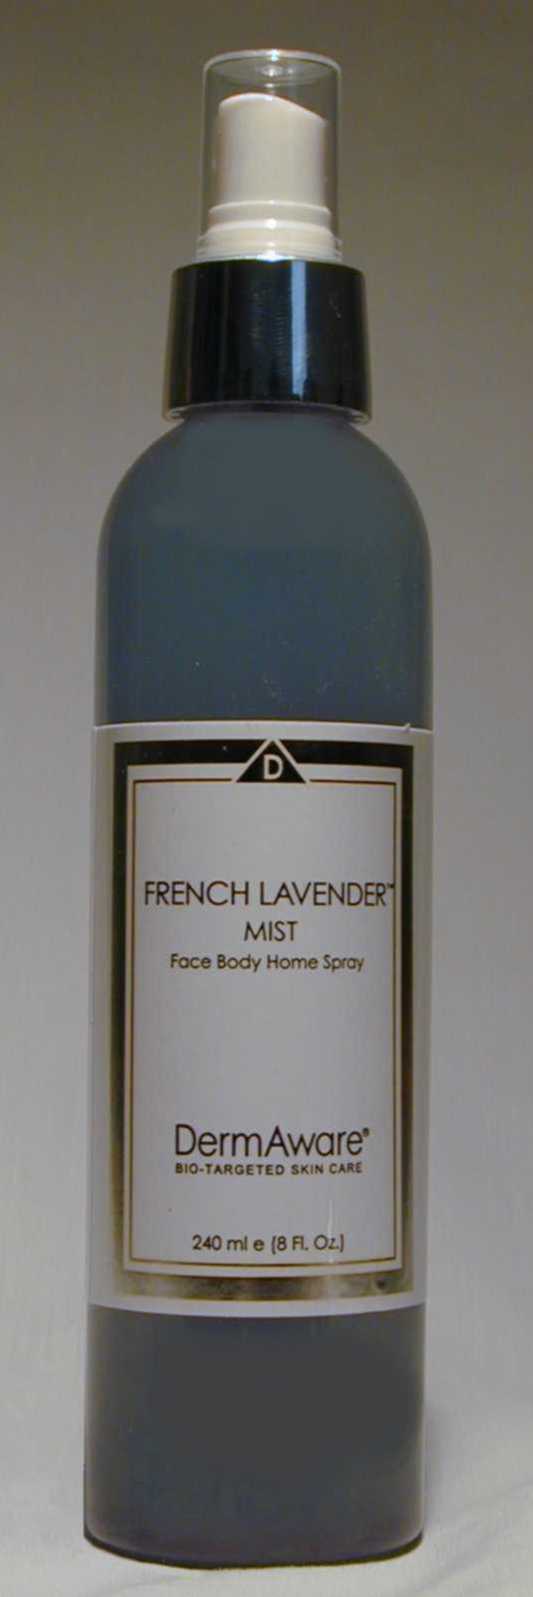 French Lavender Mist 8 oz